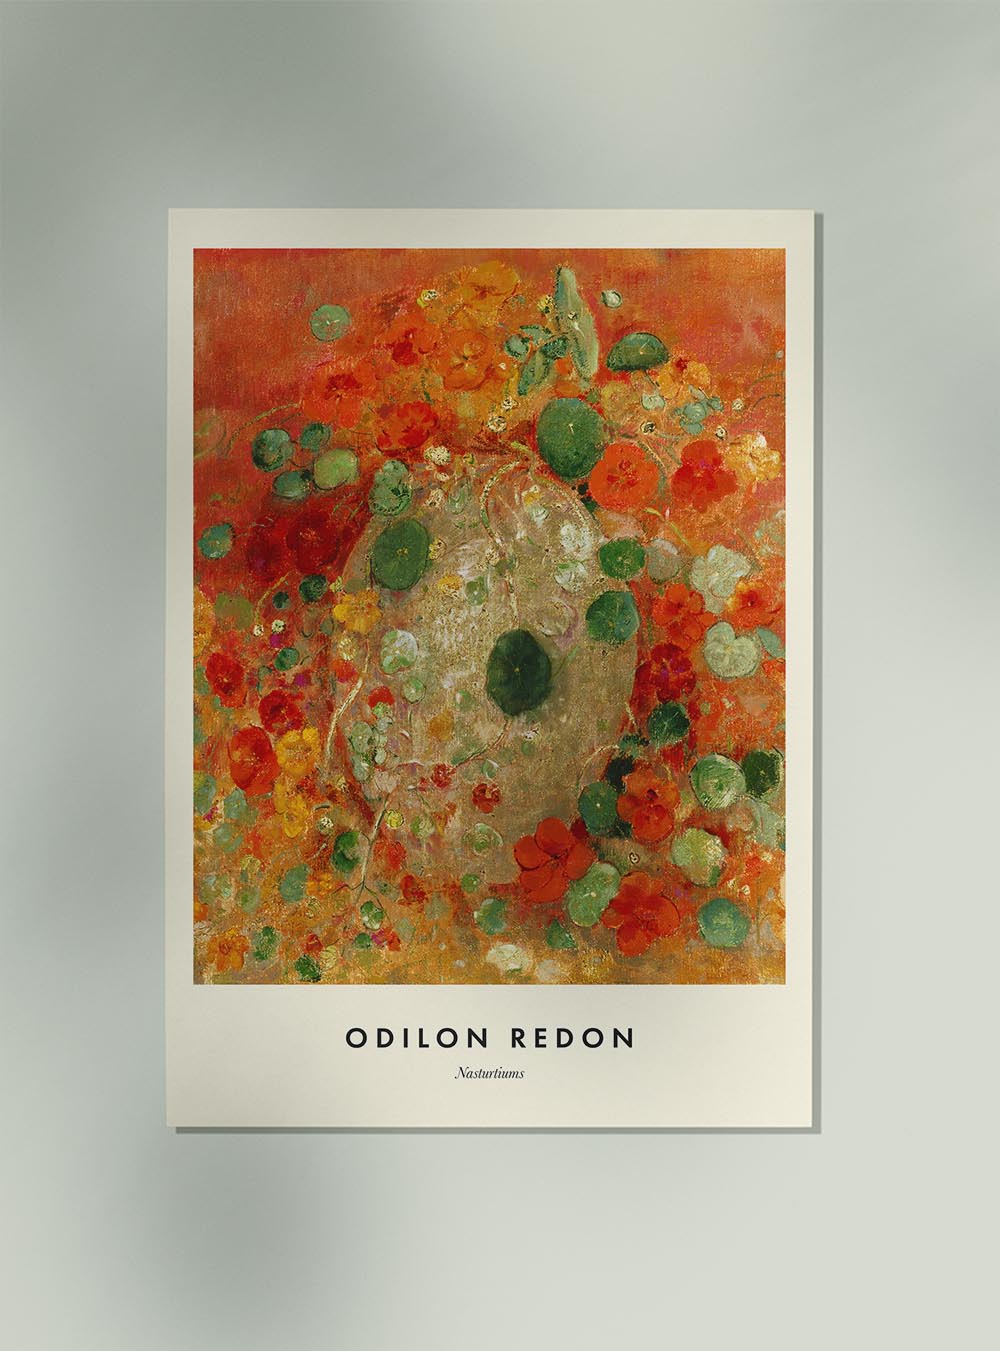 Nasturtiums by Odilon Redon